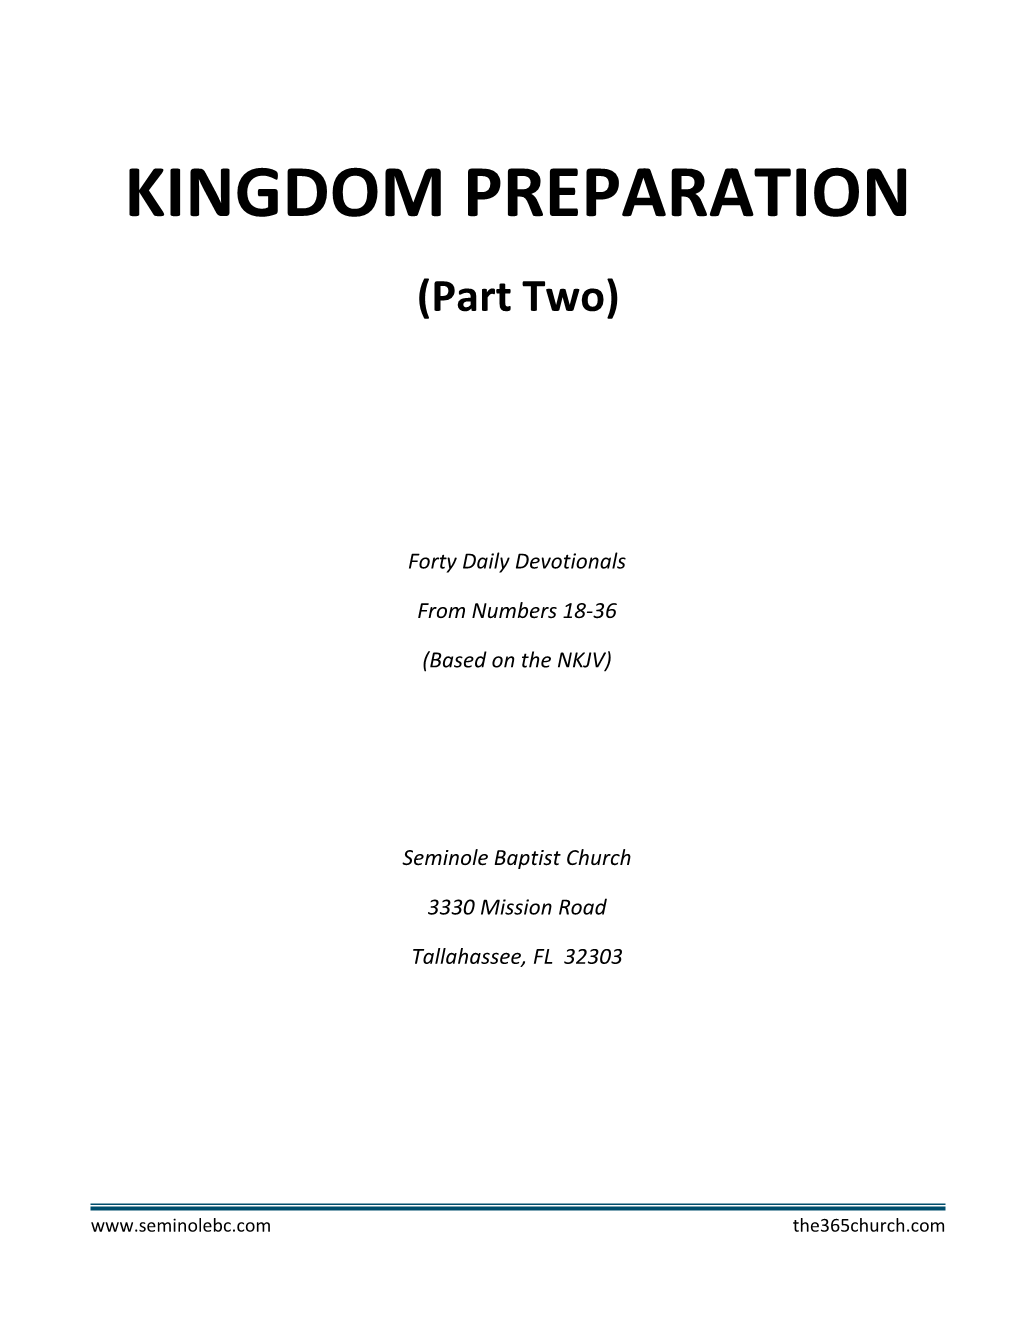 KINGDOM PREPARATION (Part Two)